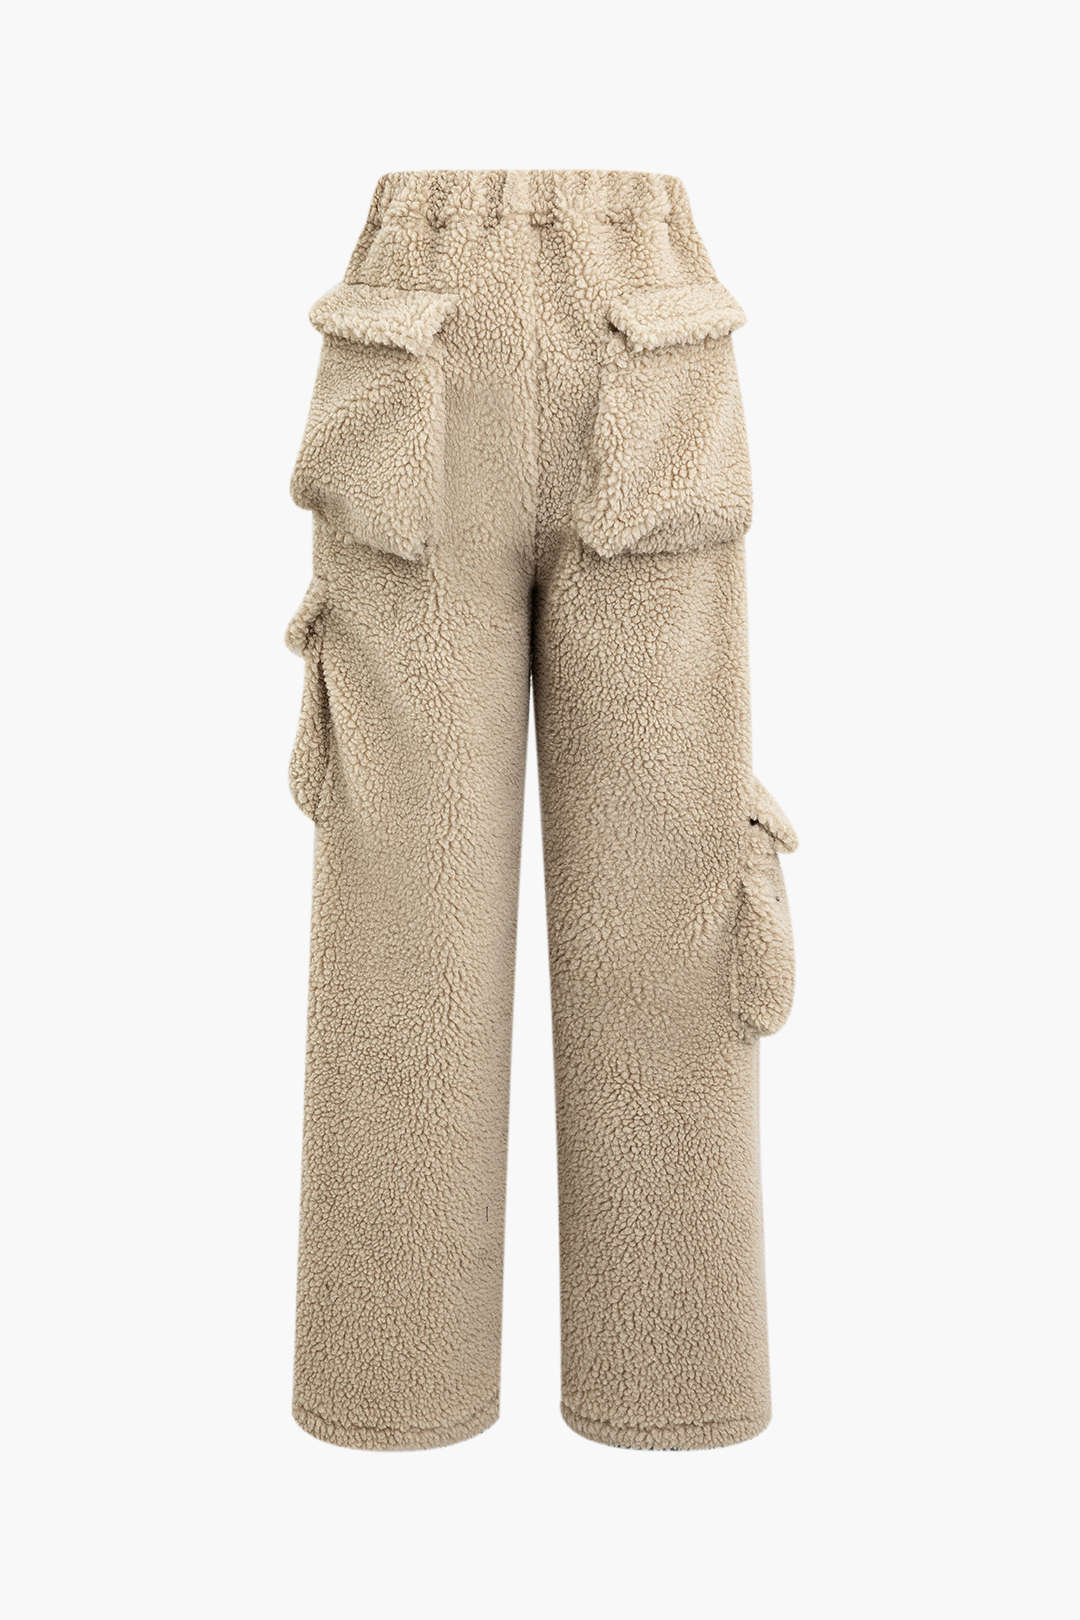 Fleece Collar Flap Pocket Zip Up Long Sleeve Top And Straight Leg Cargo Pants Set